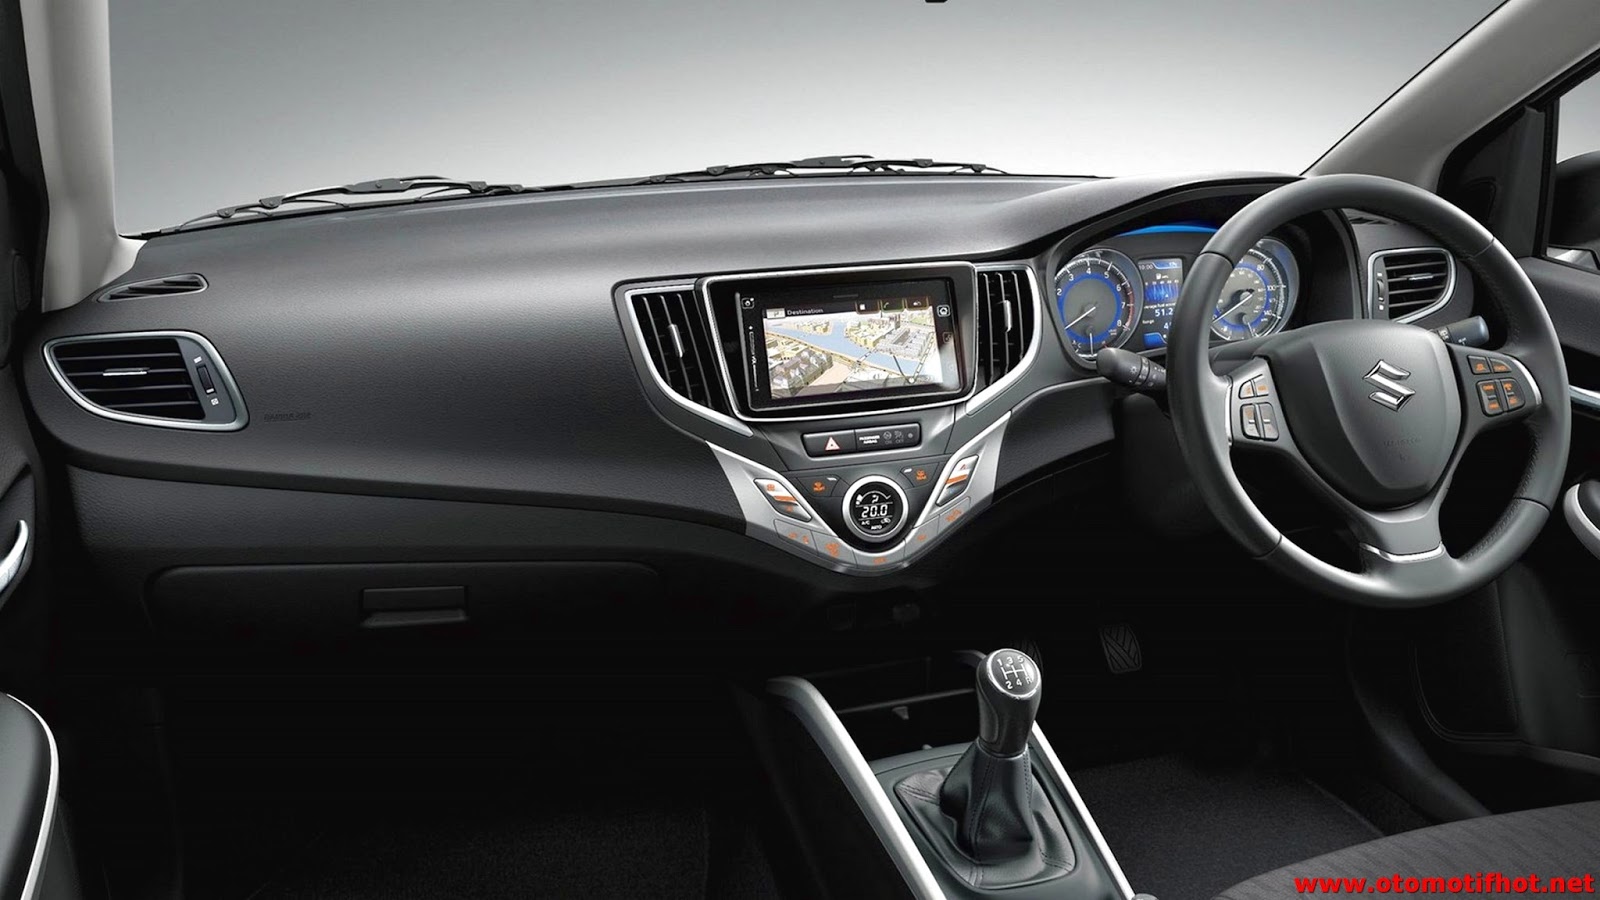 Spesifikasi dan Review terbaru Suzuki Baleno Hatchback